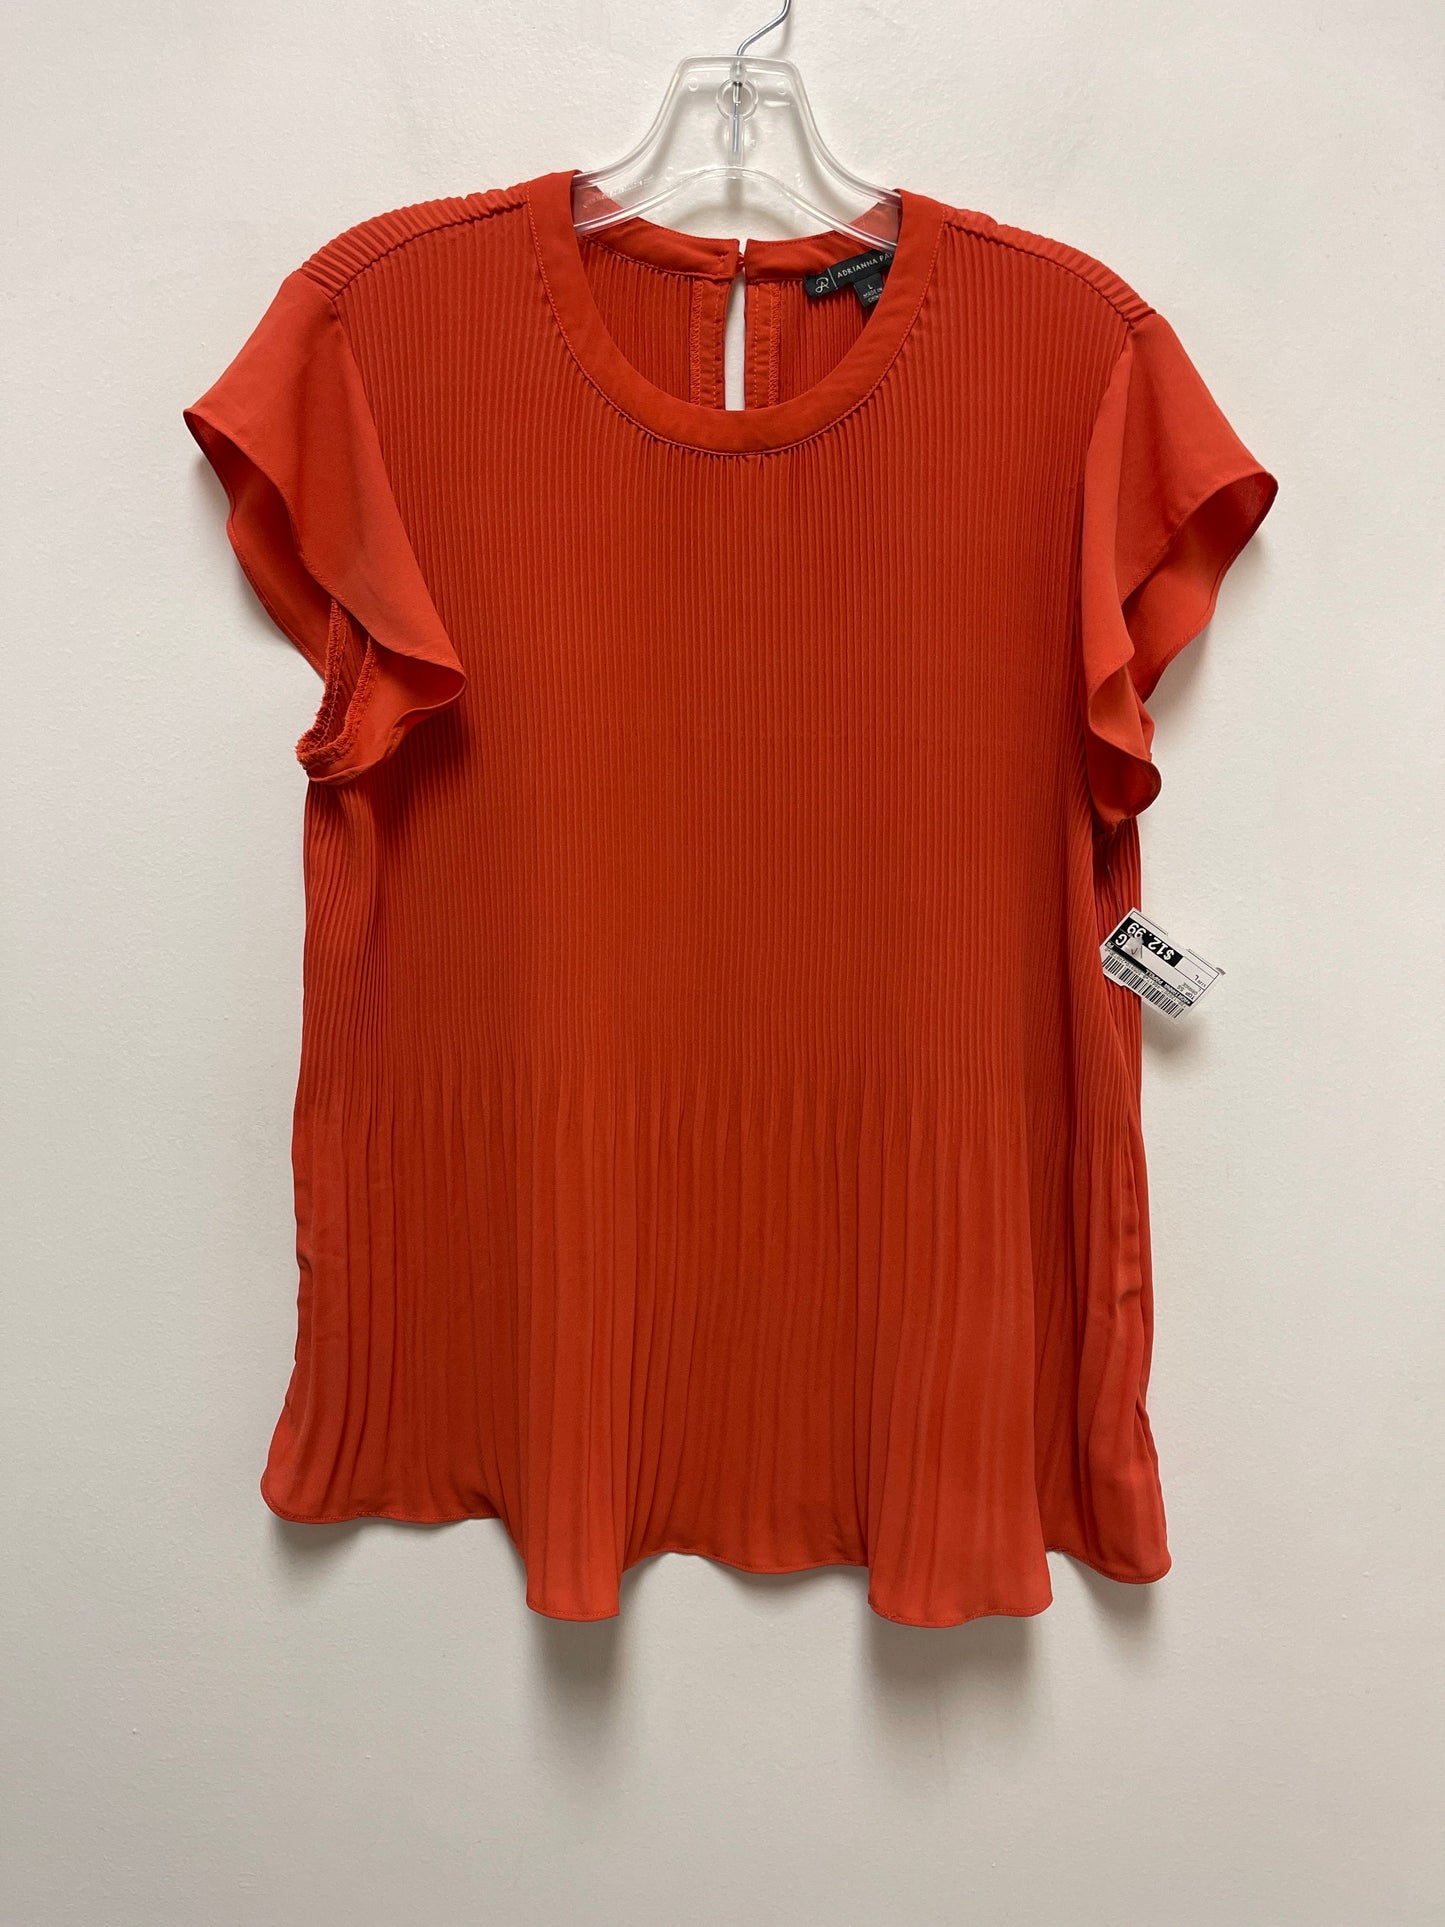 Orange Top Short Sleeve Adrianna Papell, Size L